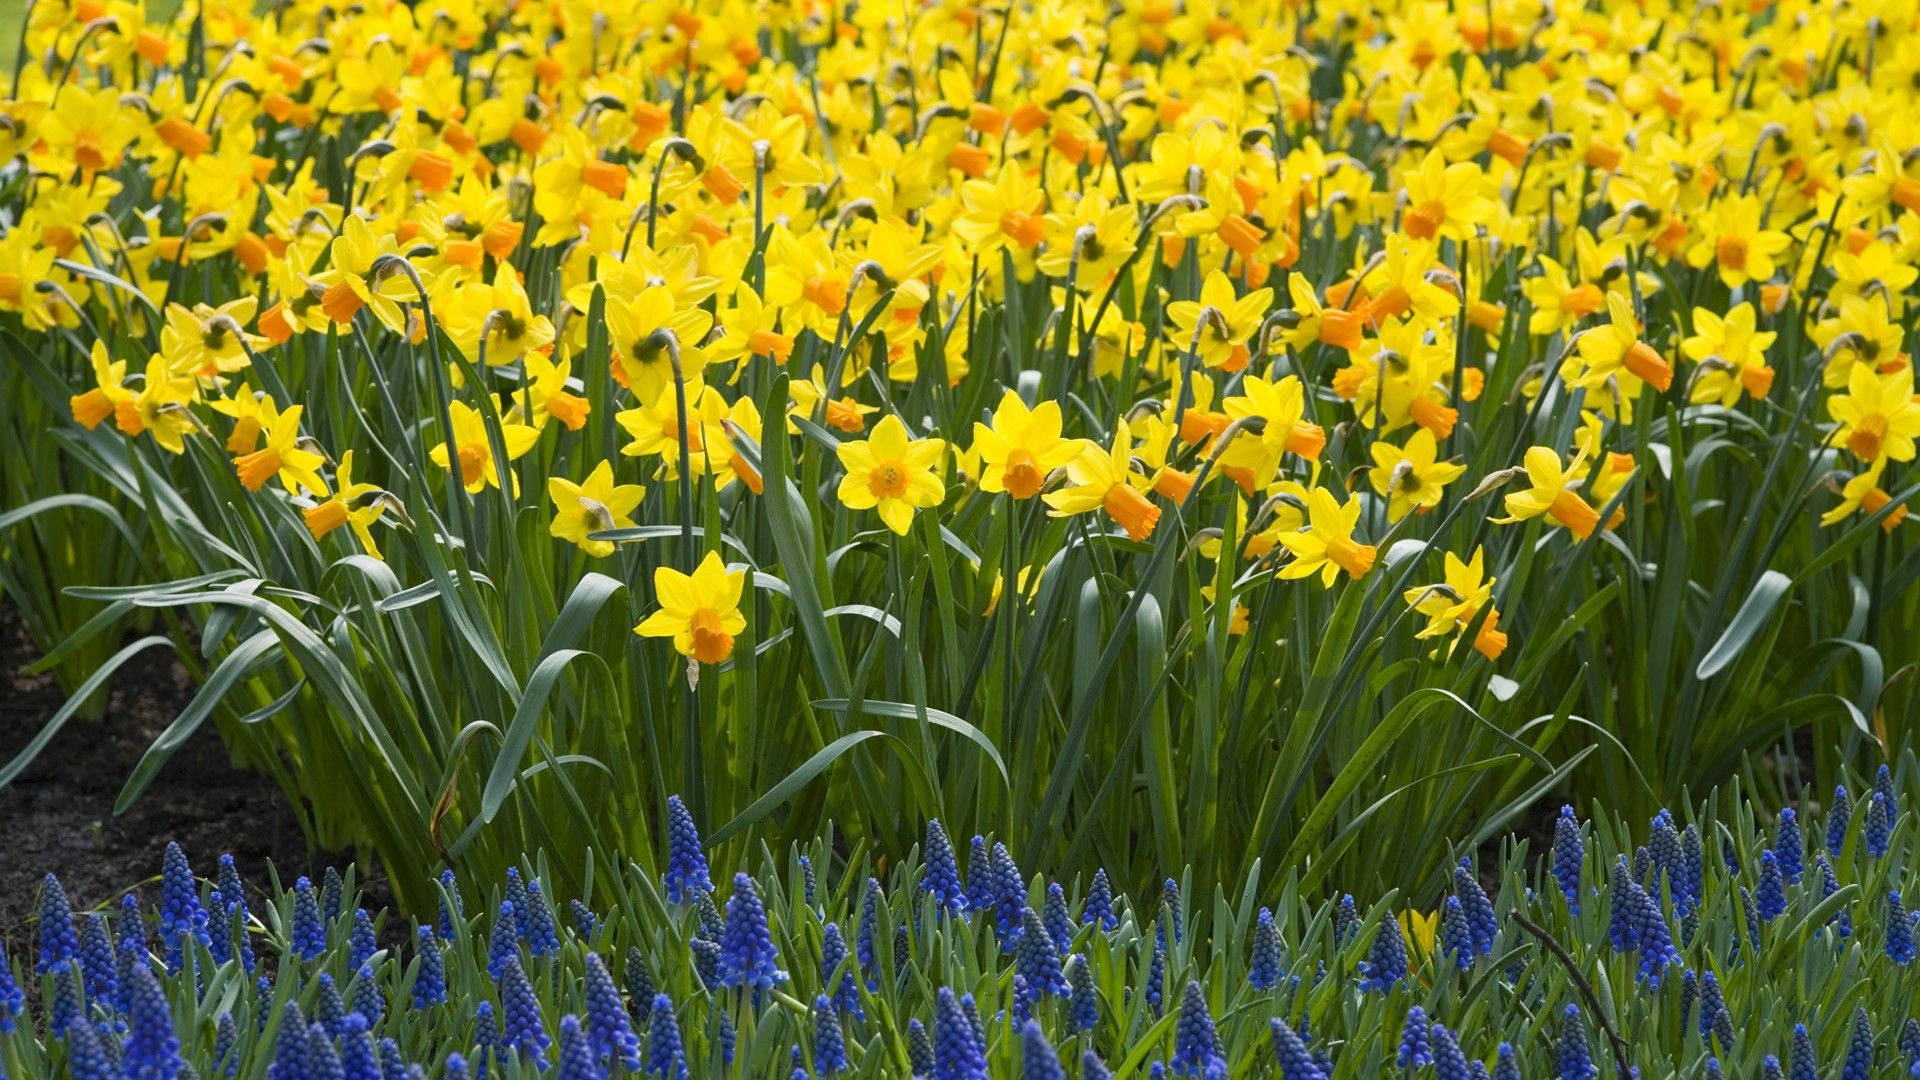 Daffodils Near Muscari Plants